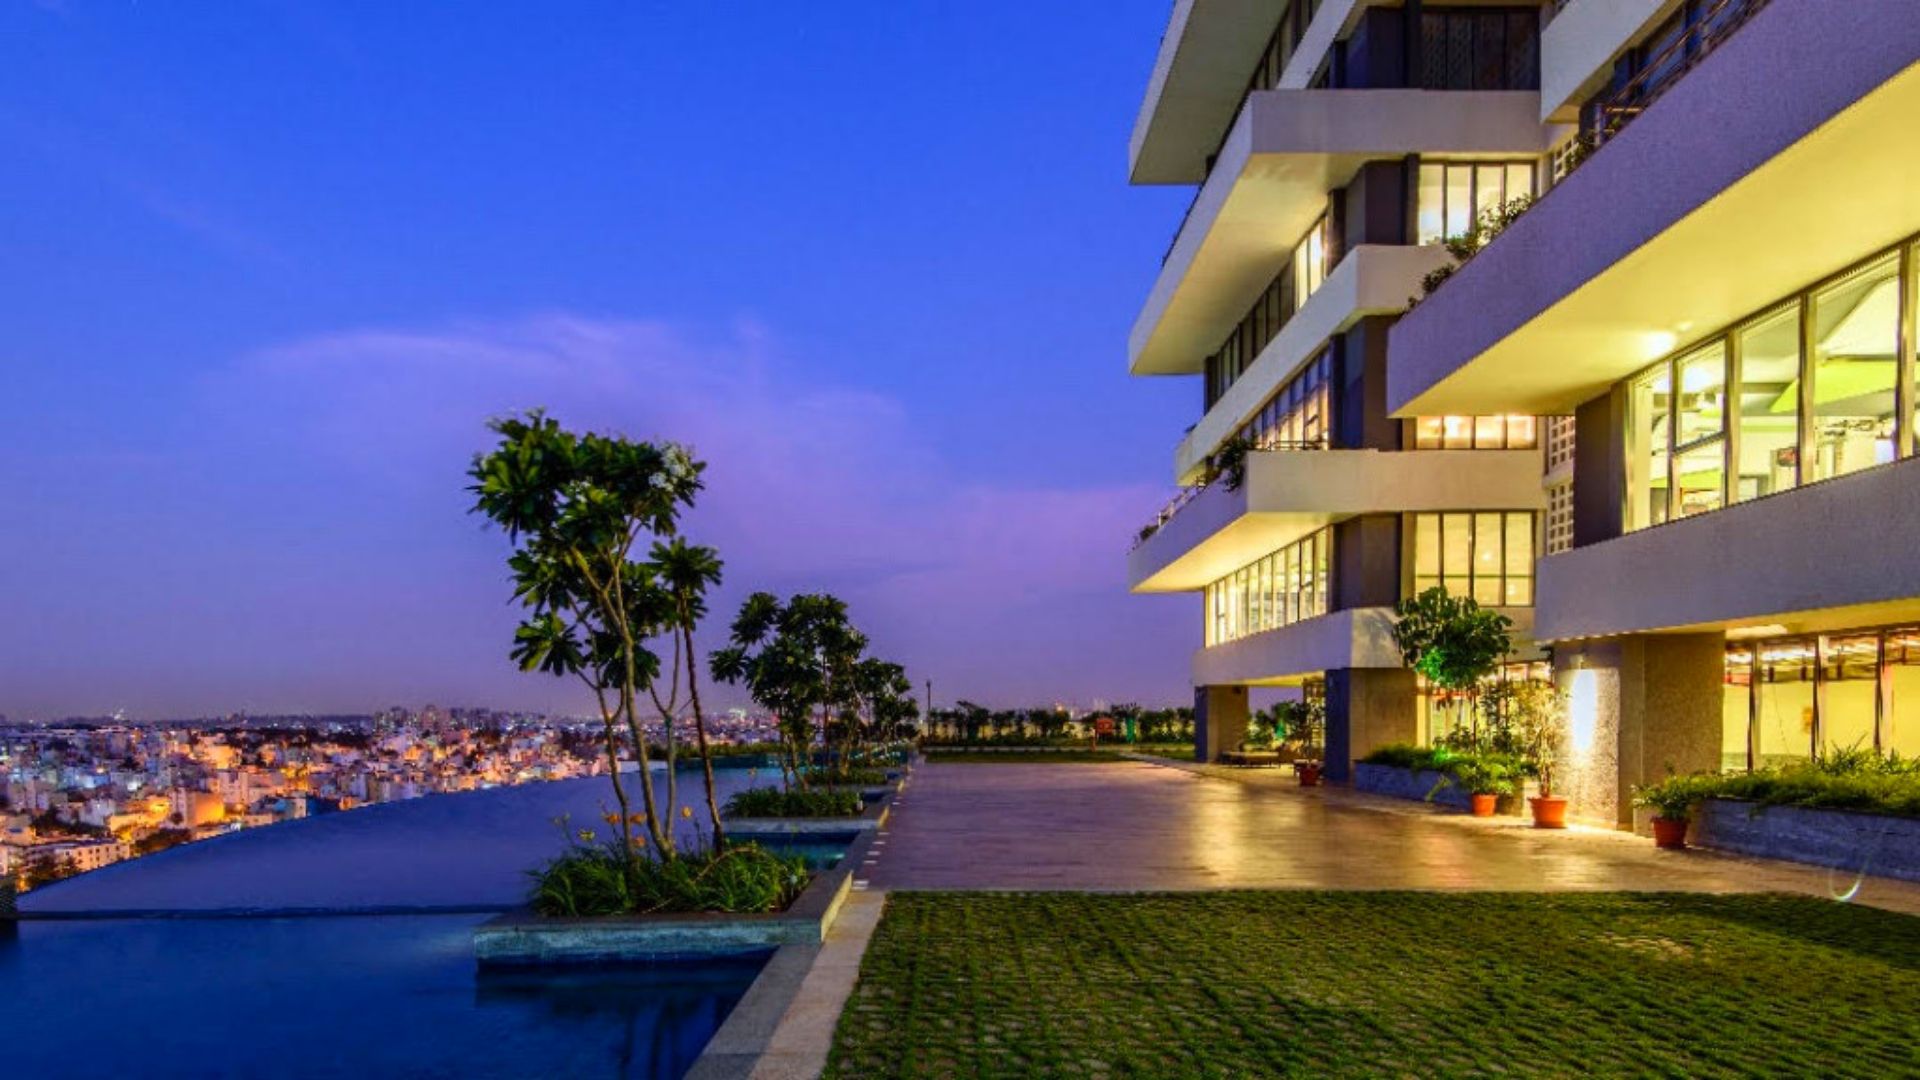 Tata Promont Apartments | Luxuryproperties.in